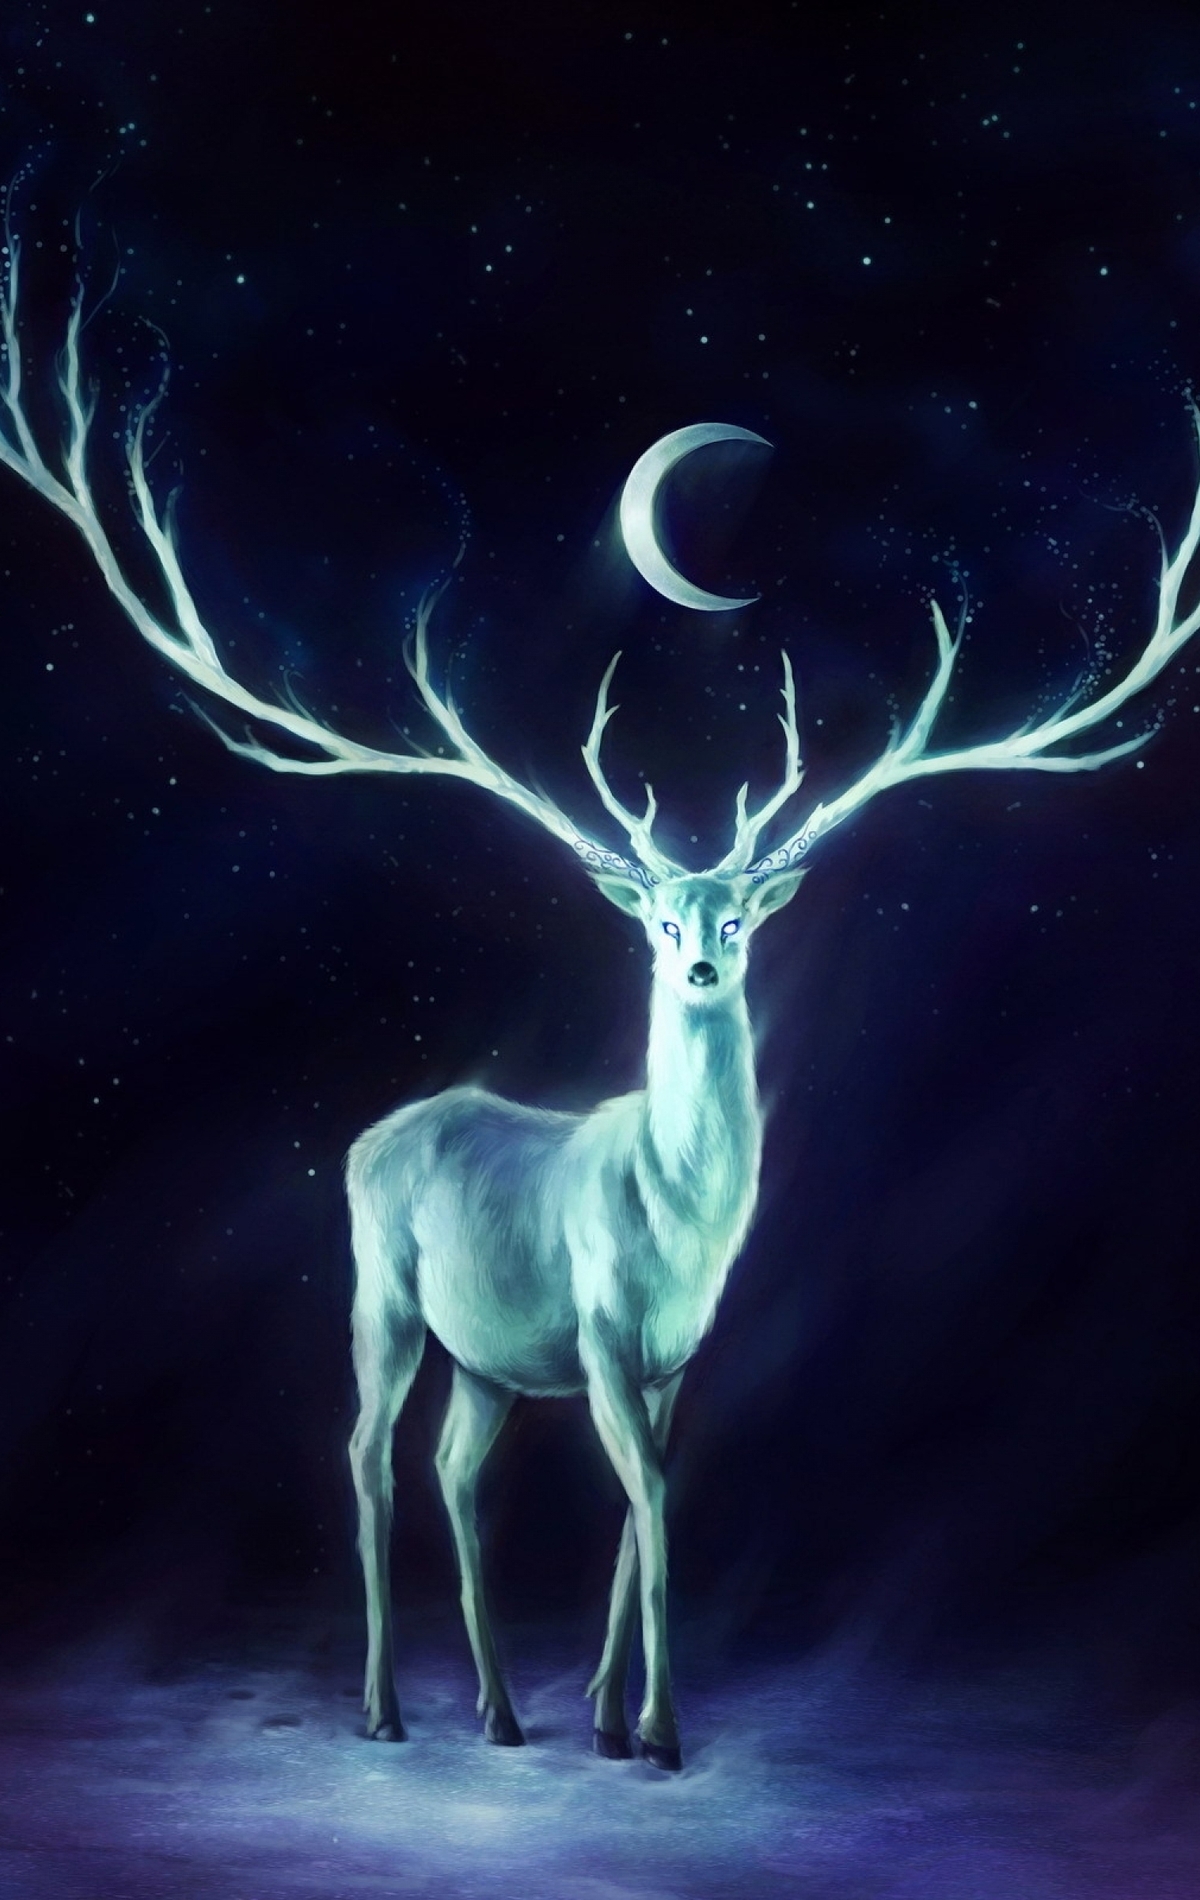 Image: Lights, animal, deer, horns, moon, sky, stars, night